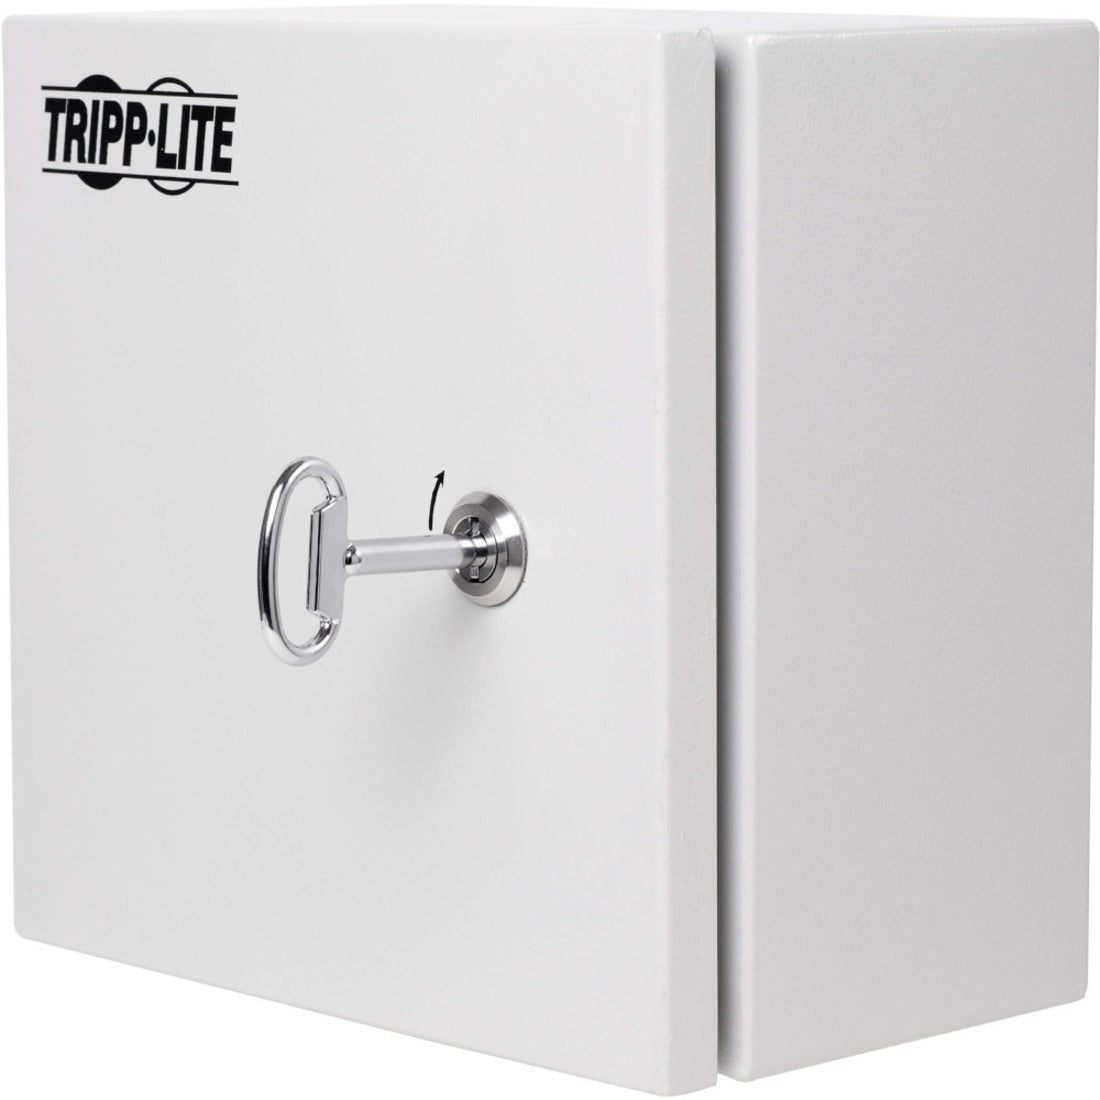 Tripp Lite SRIN410106 Industrial Locking Metal Outdoor Enclosure, NEMA 4, 10x10x6in